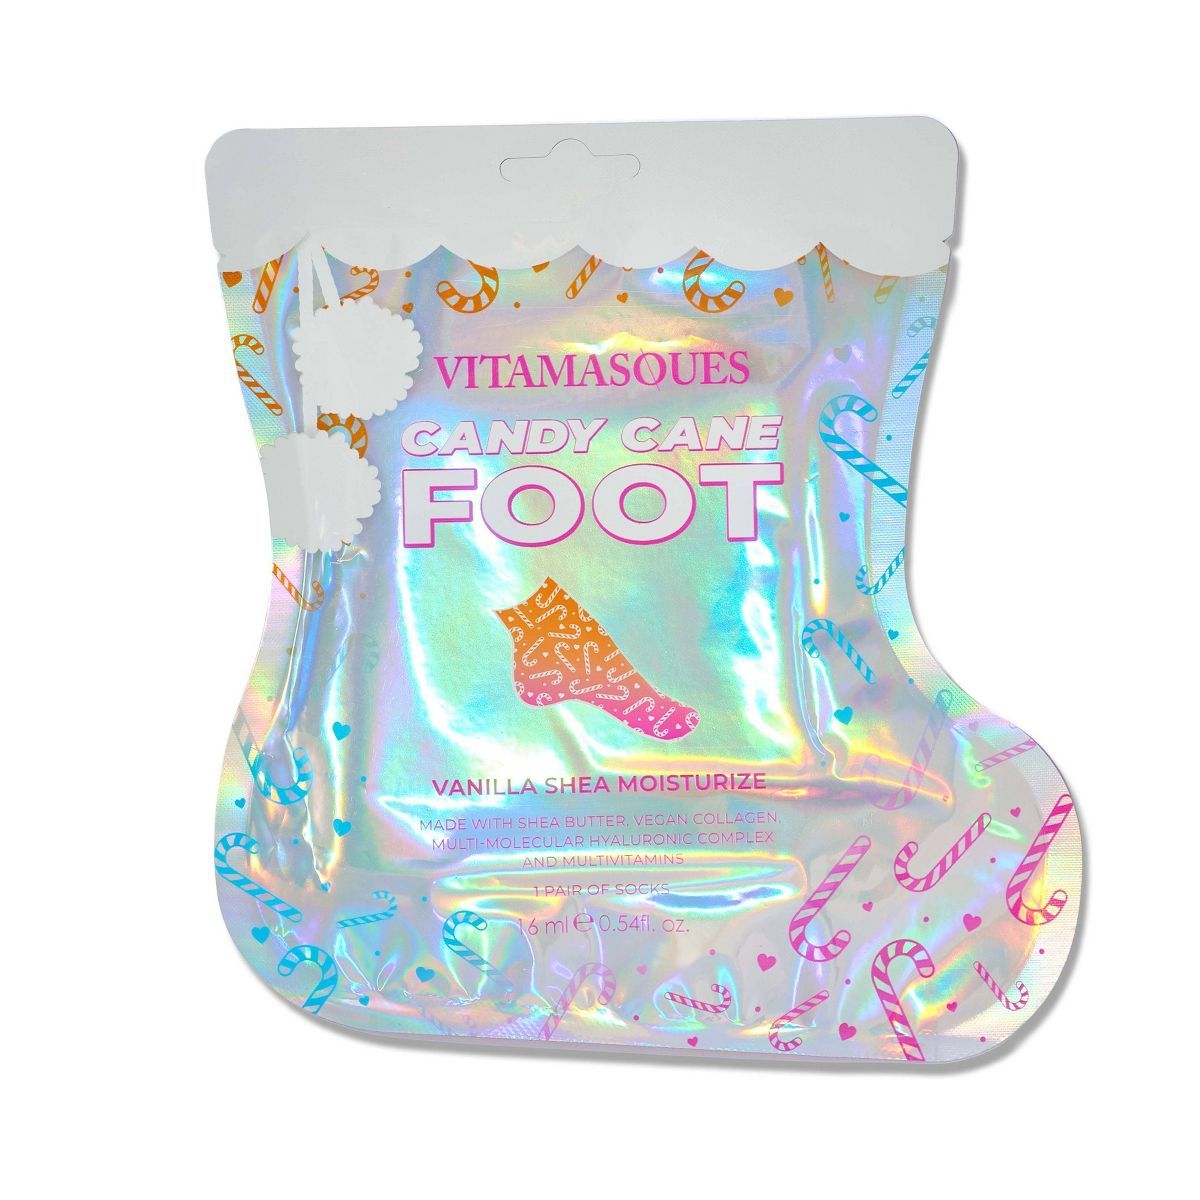 Vitamasques Candy Cane Foot Mask - 0.54 fl oz | Target